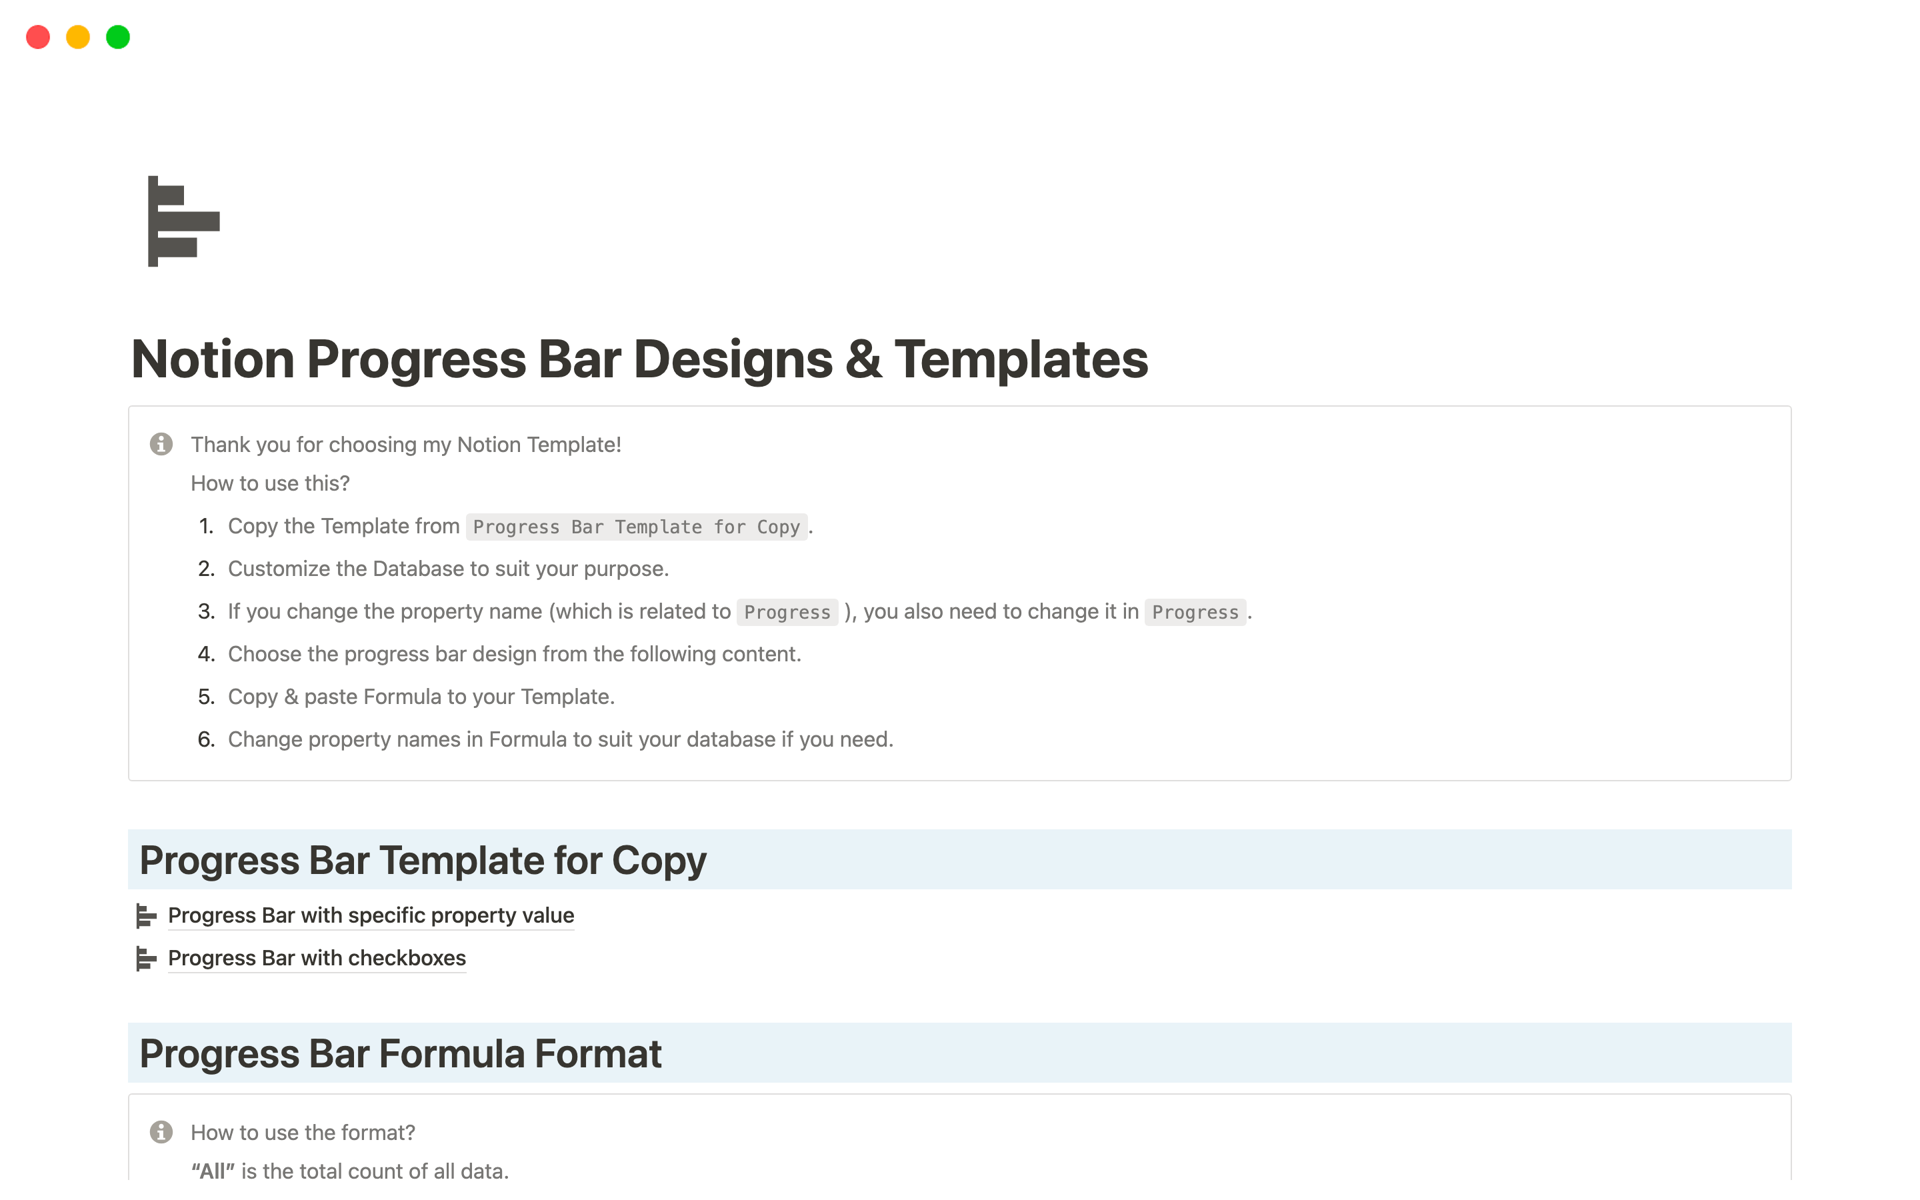 Vista previa de una plantilla para Notion Progress Bar Designs & Templates